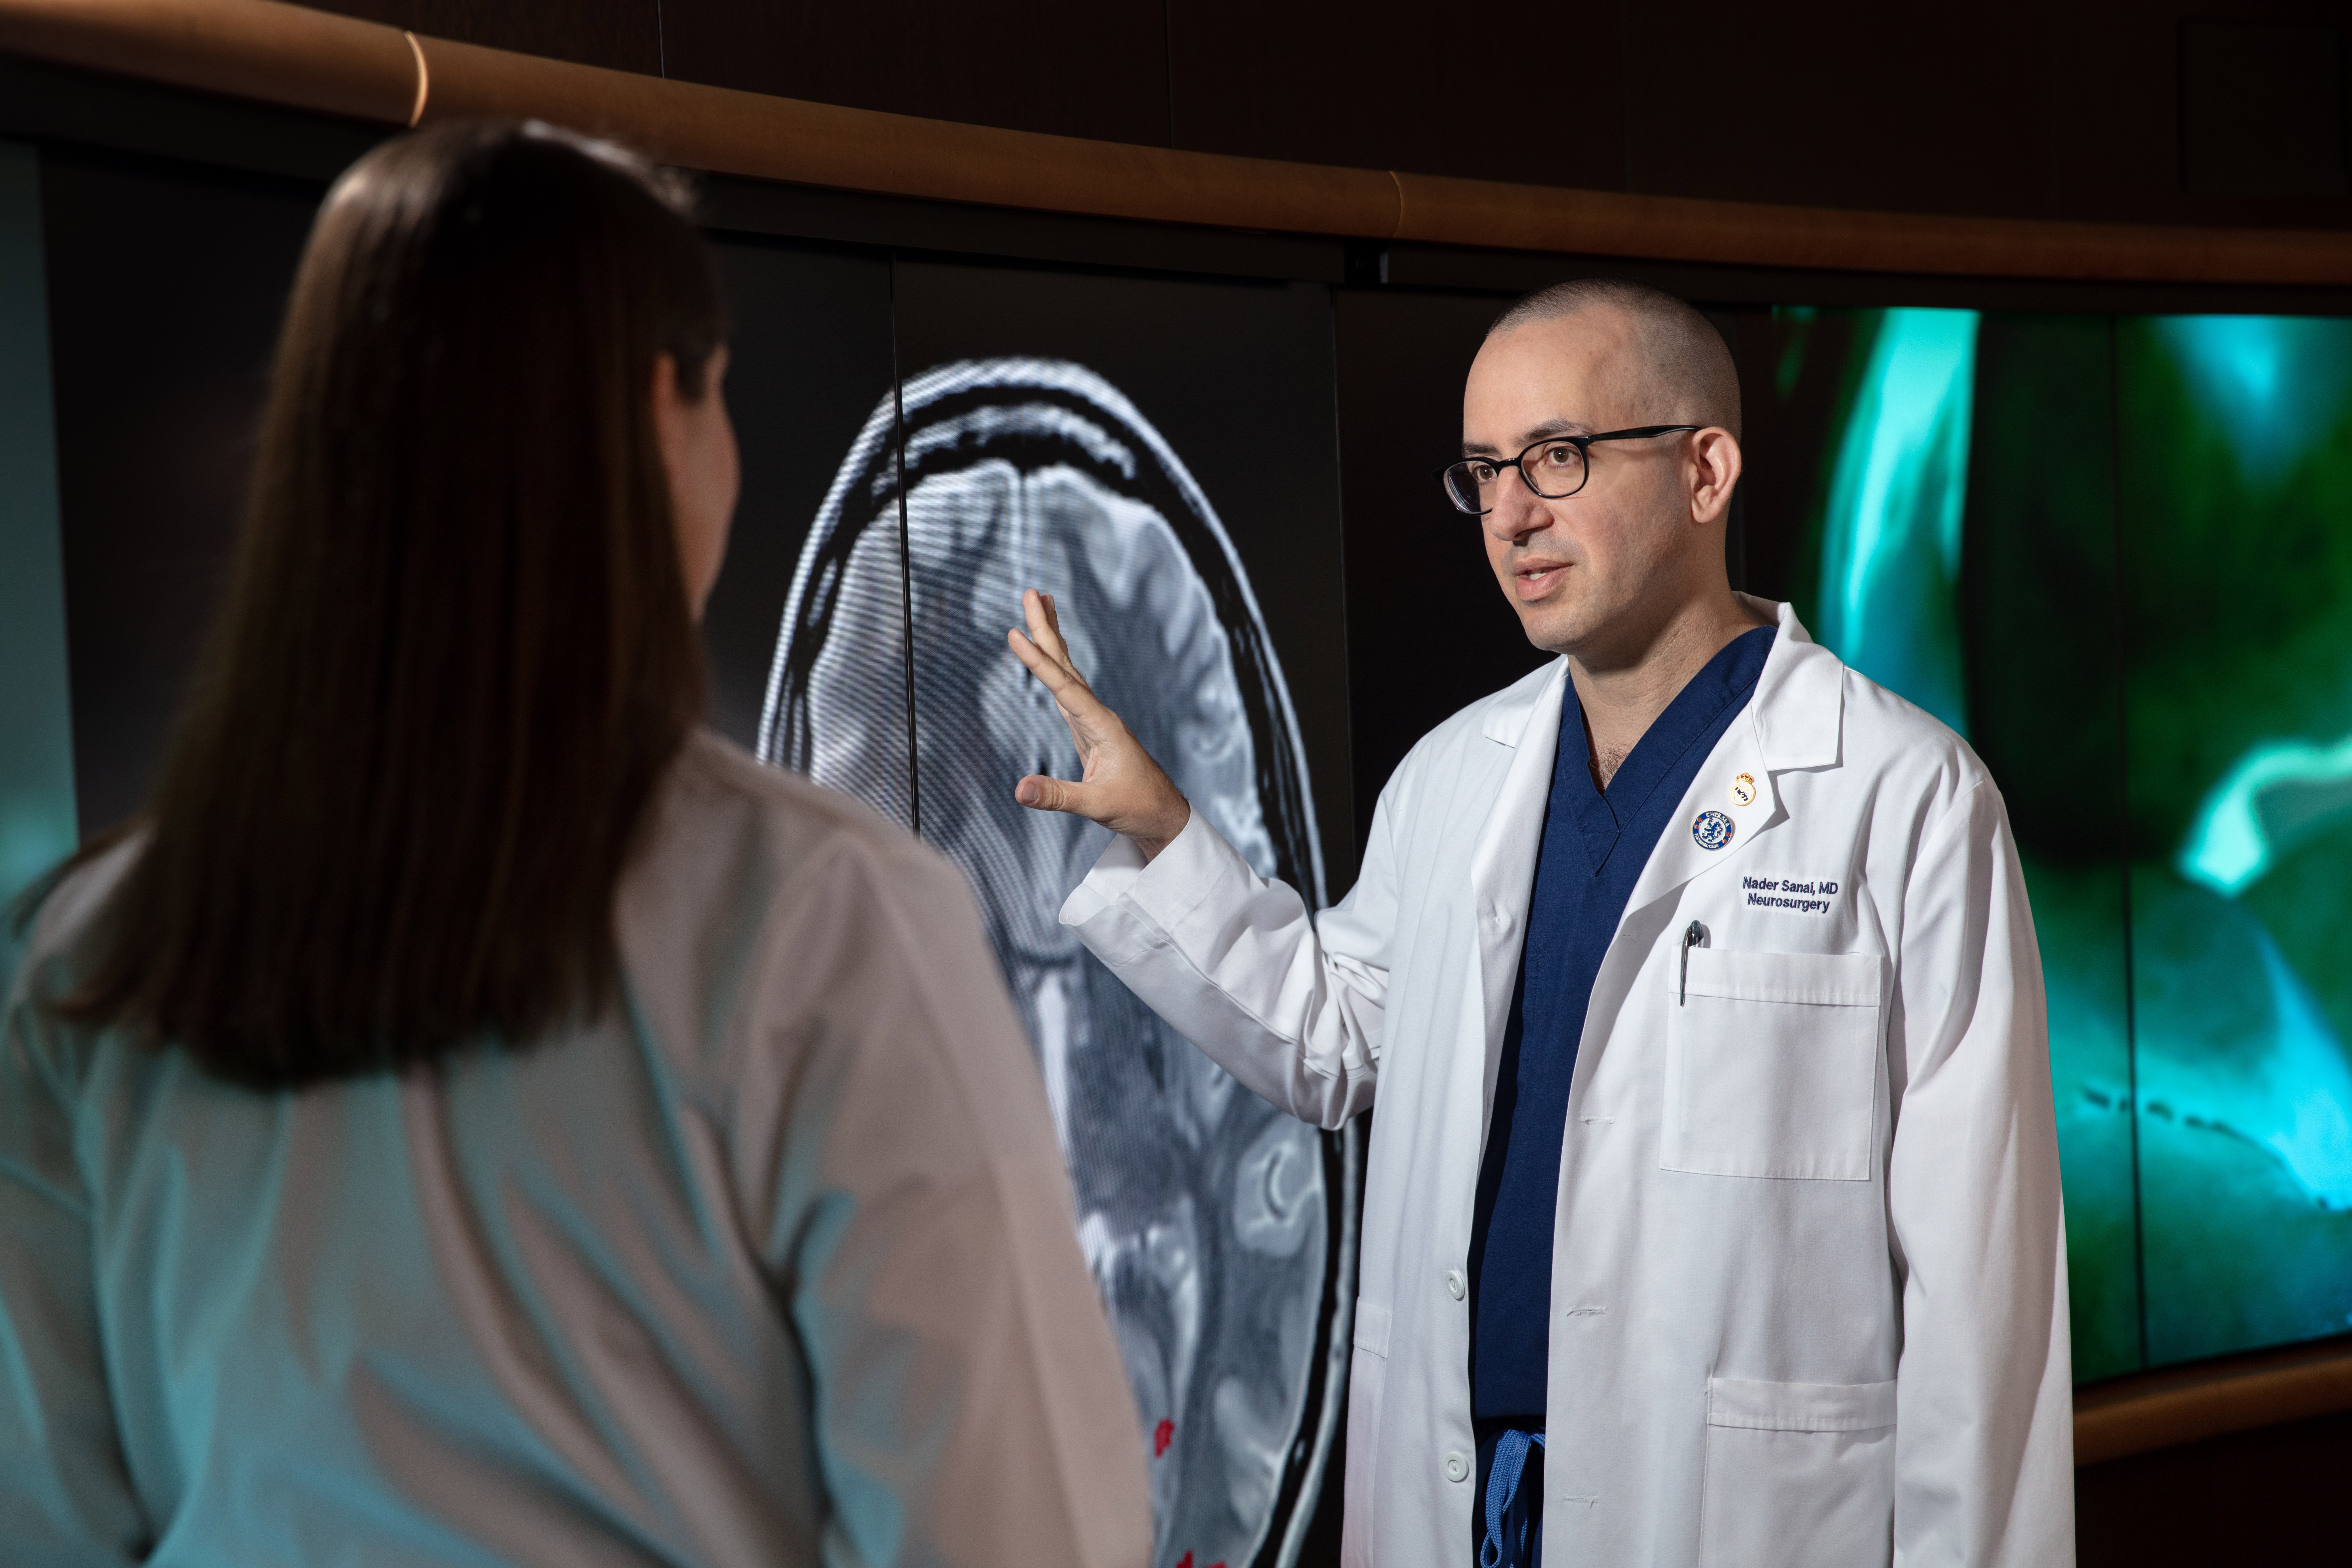 Dr. Sanai leads the Ivy Brain Tumor Center